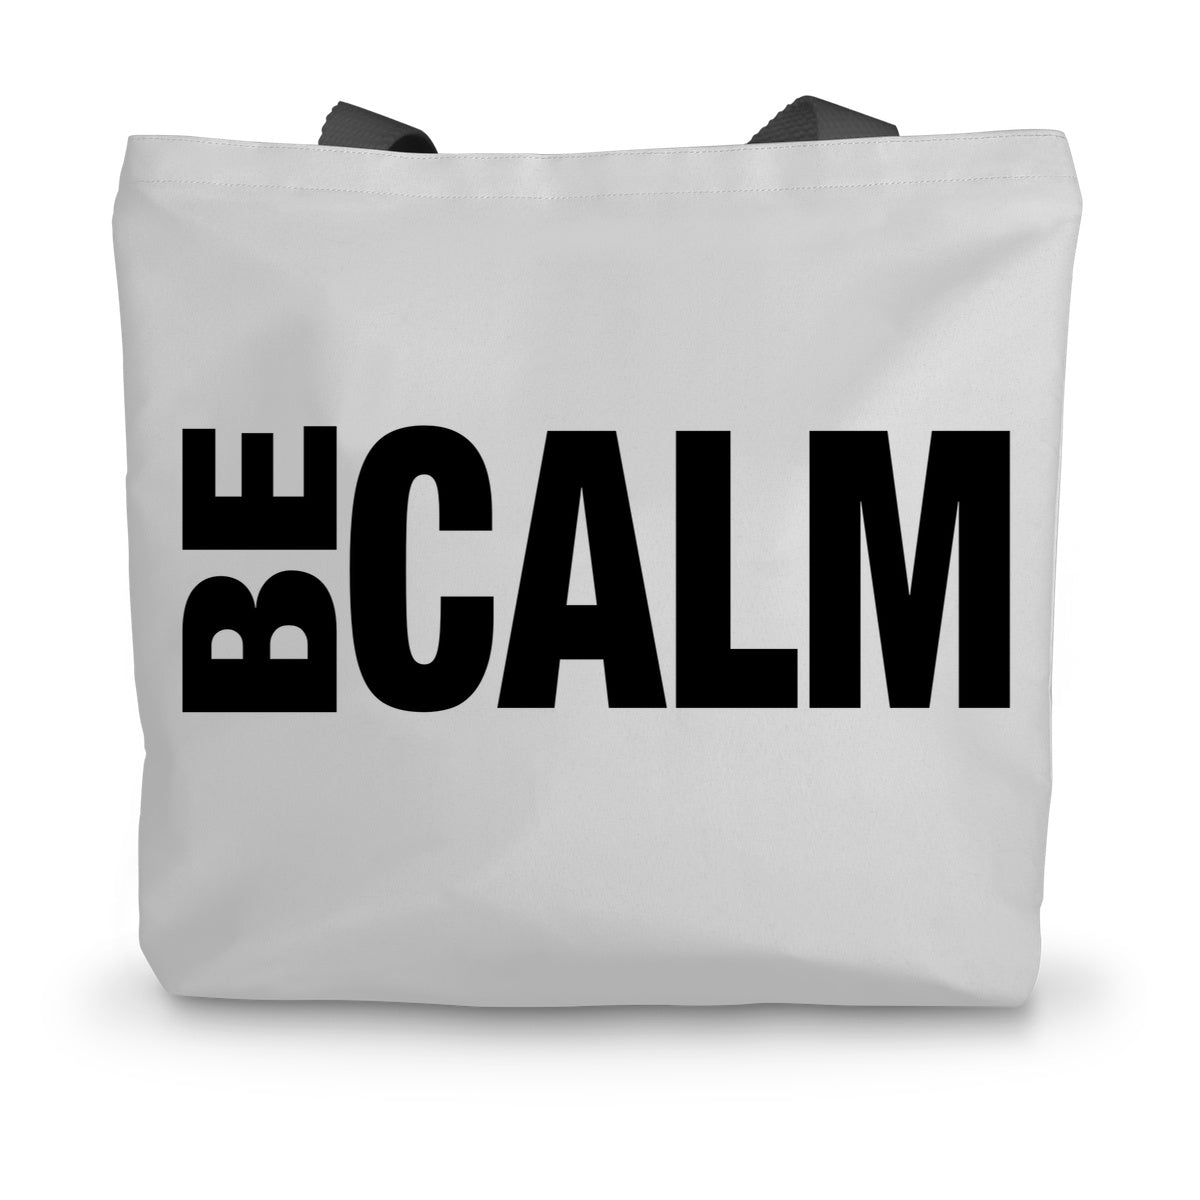 Be Calm Canvas Tote Bag